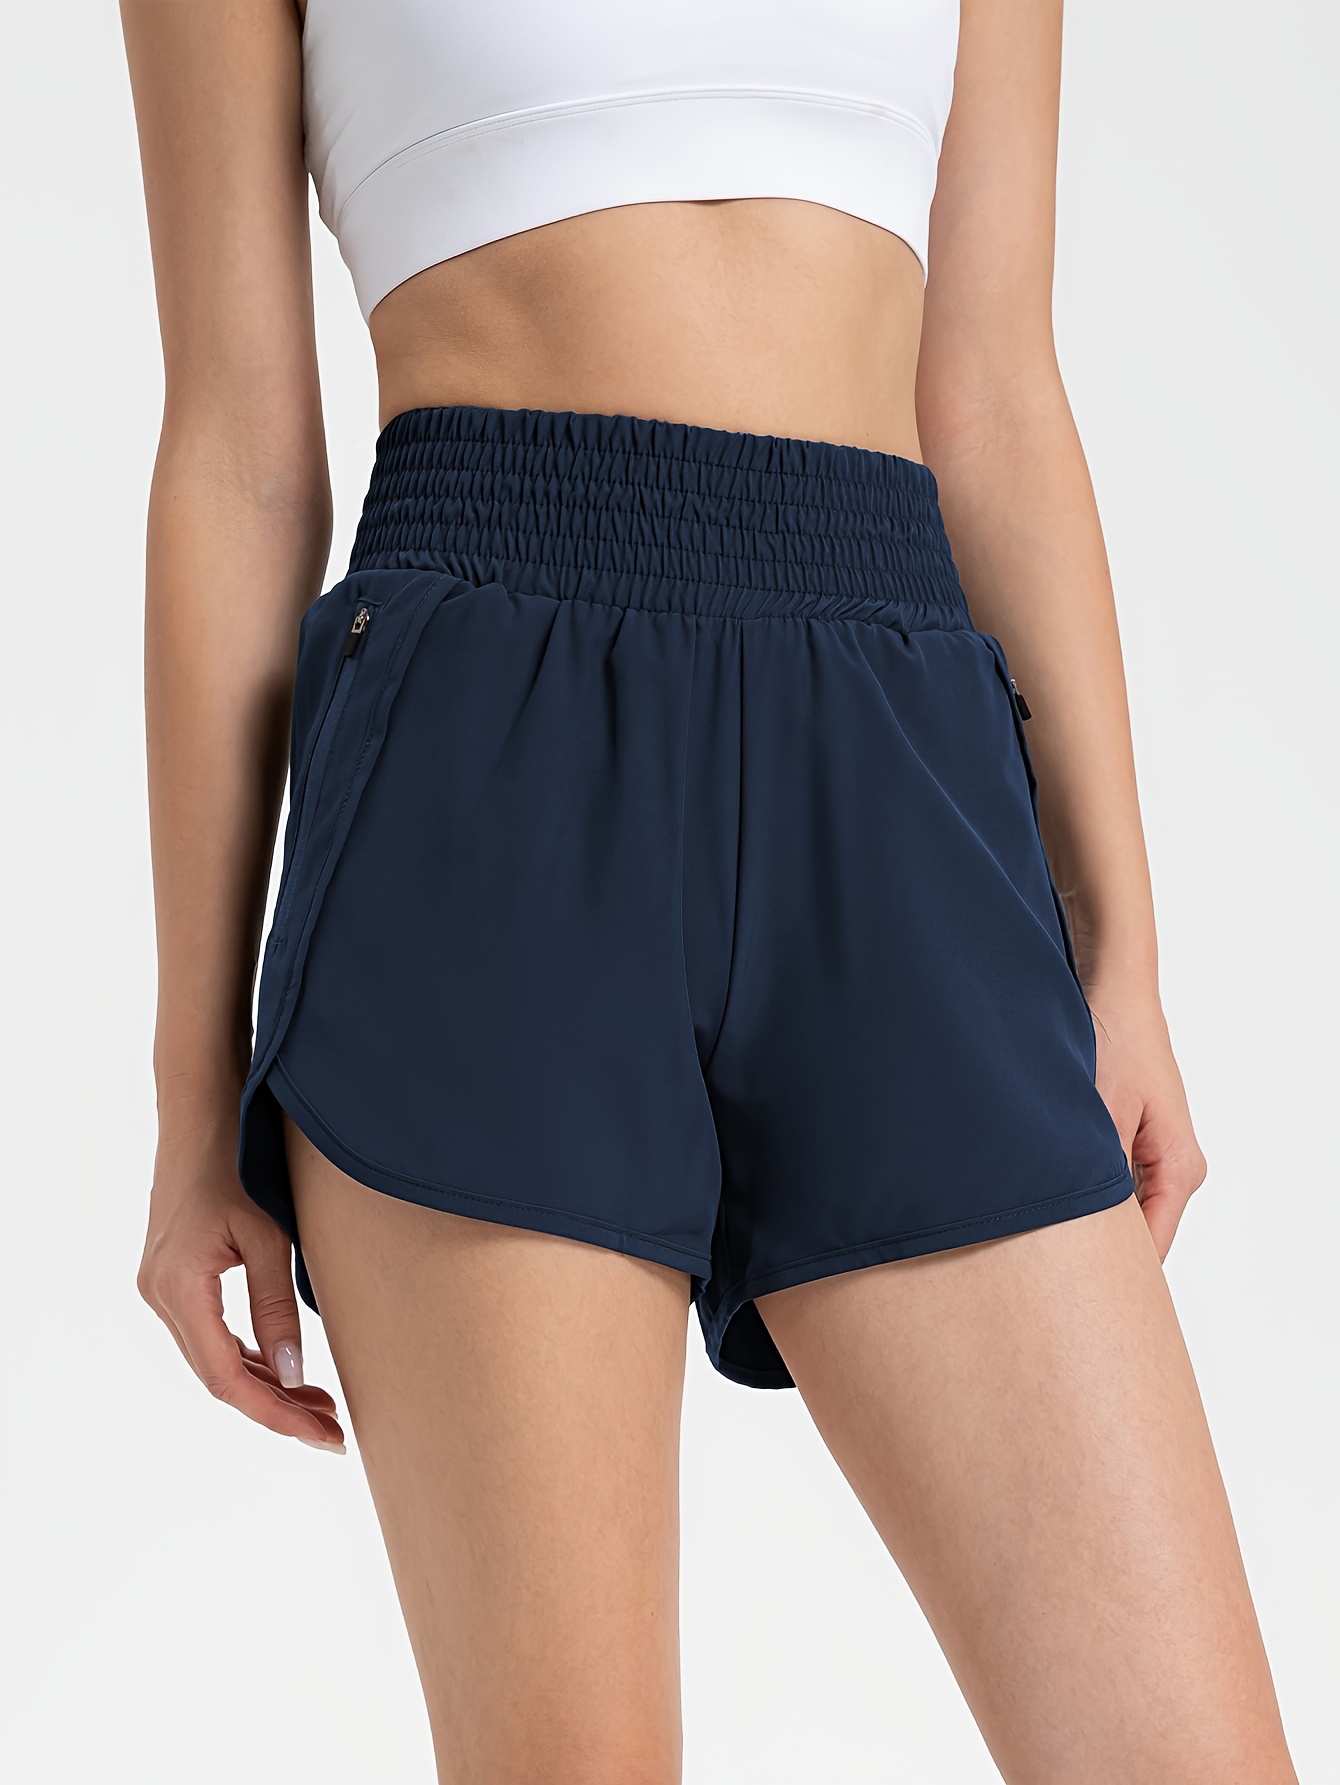 Women's Running Shorts Elastic High Waisted Shorts Pocket Sporty Workout  Shorts Quick Dry Athletic Shorts Pants